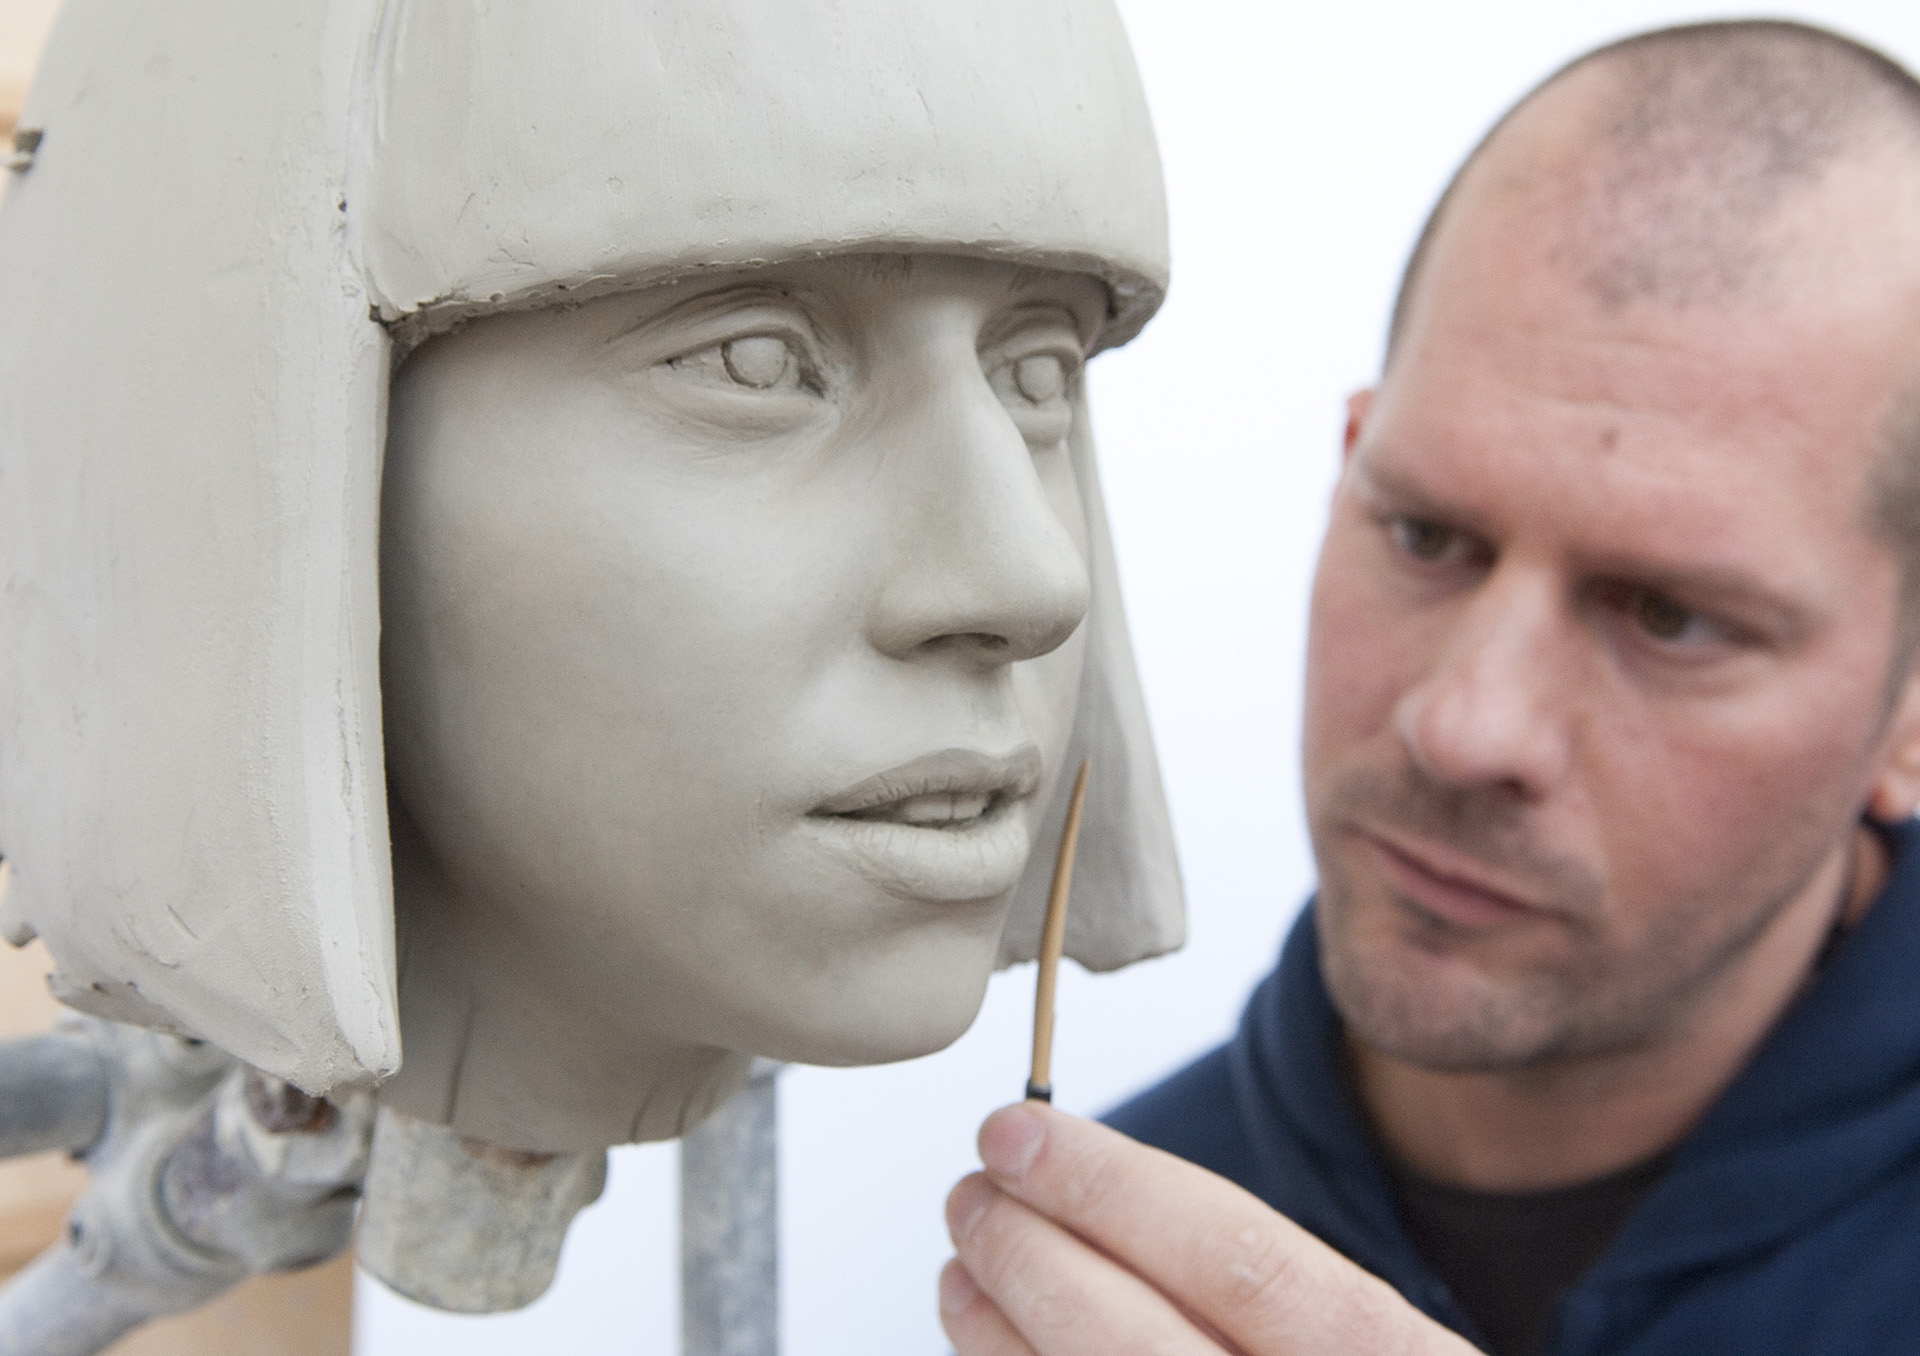 Sculptor working on Lady Gaga sculpture